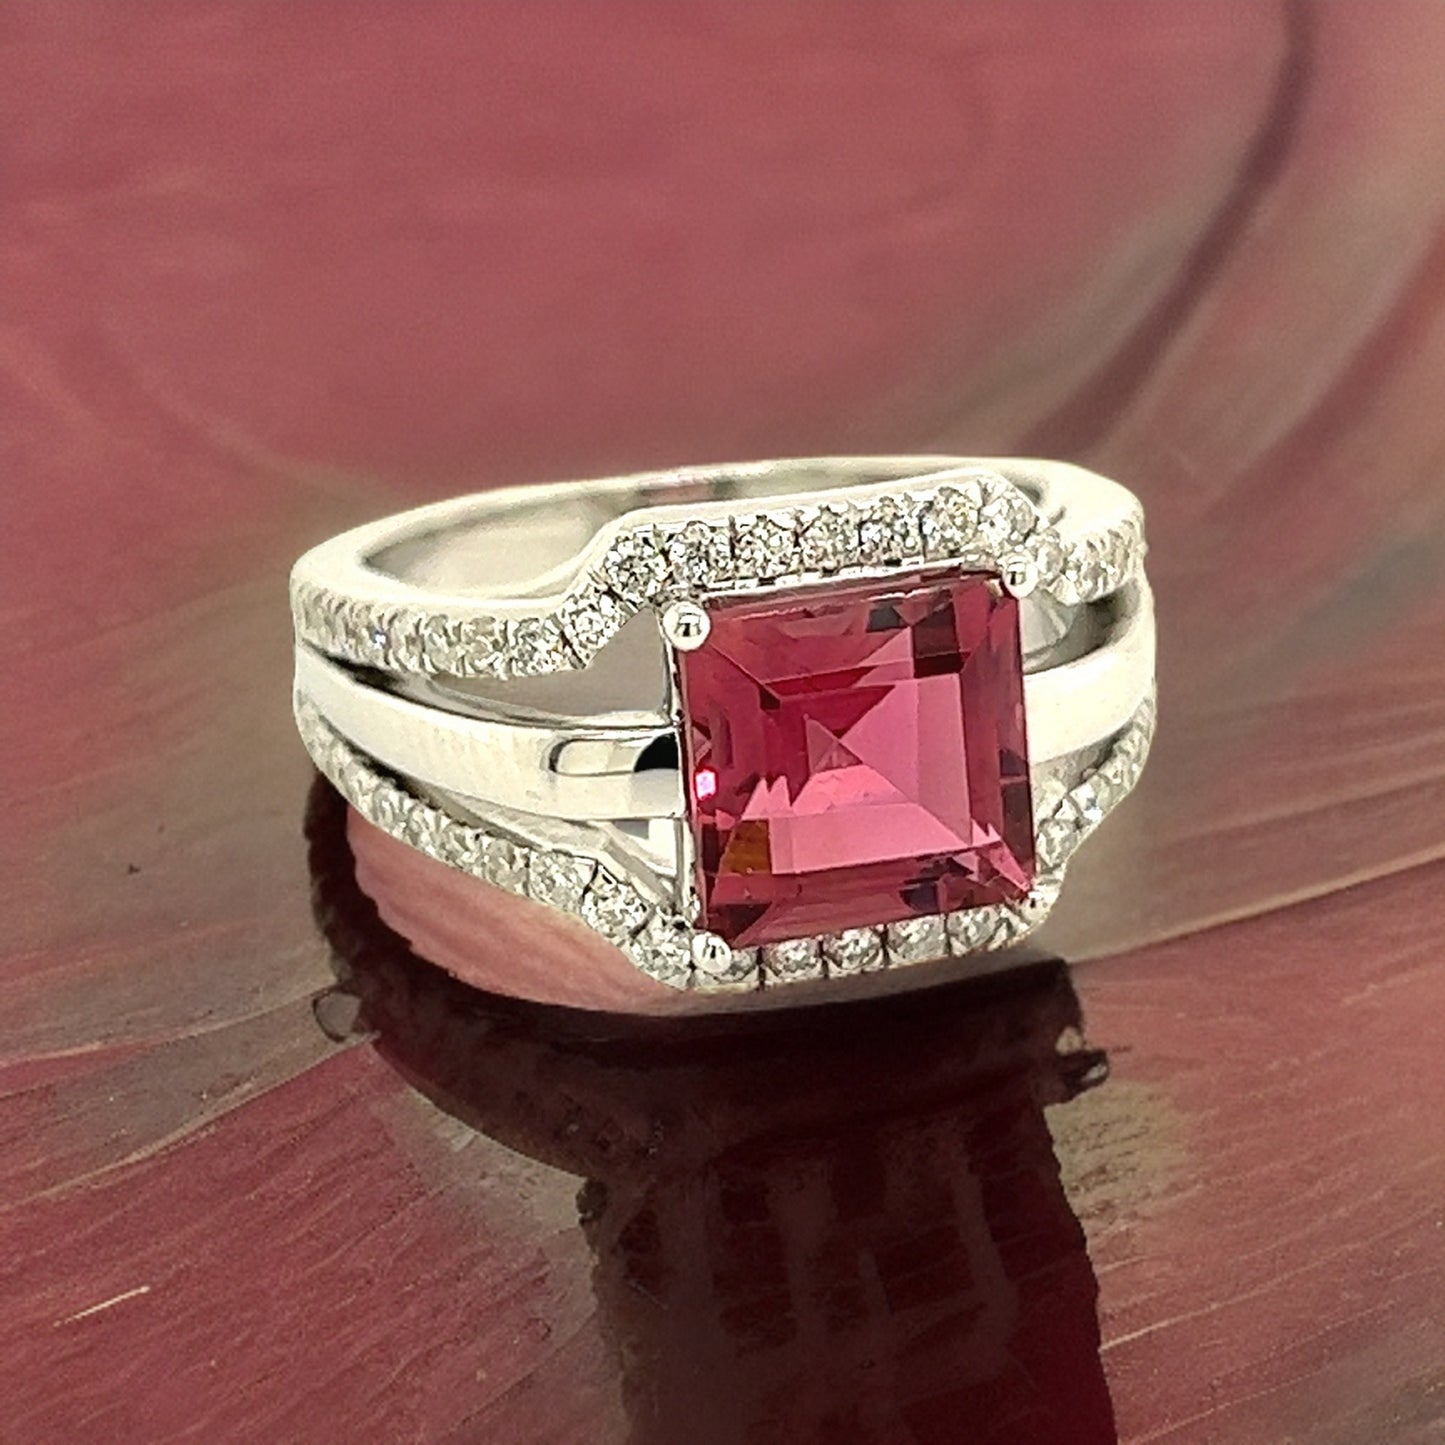 Natural Tourmaline Diamond Ring Size 6.5 14k W Gold 3.24 TCW Certified $3,950 217856